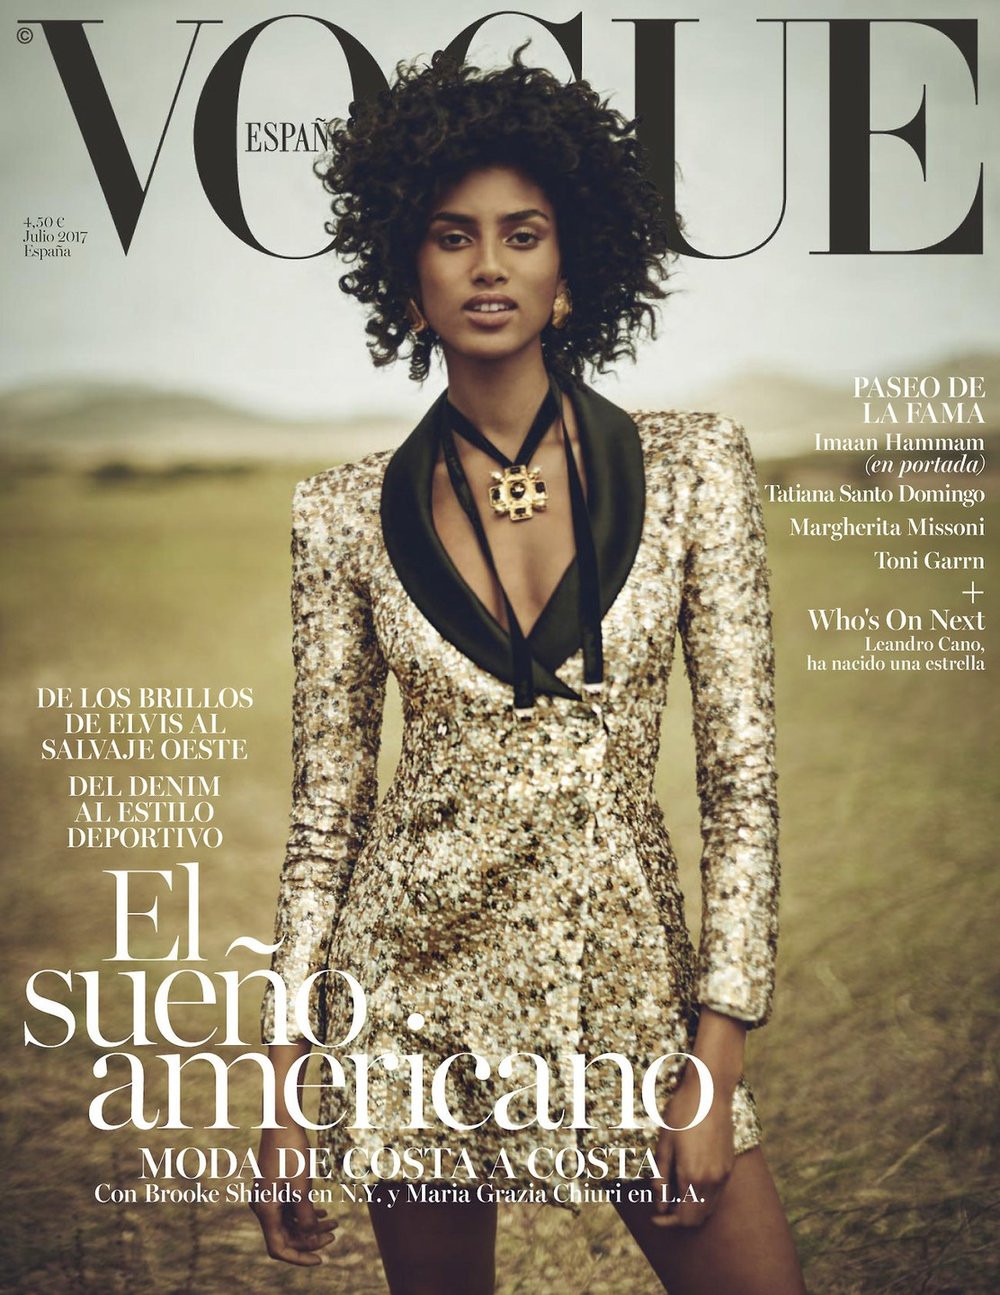 Imaan Hammam en couverture de Vogue